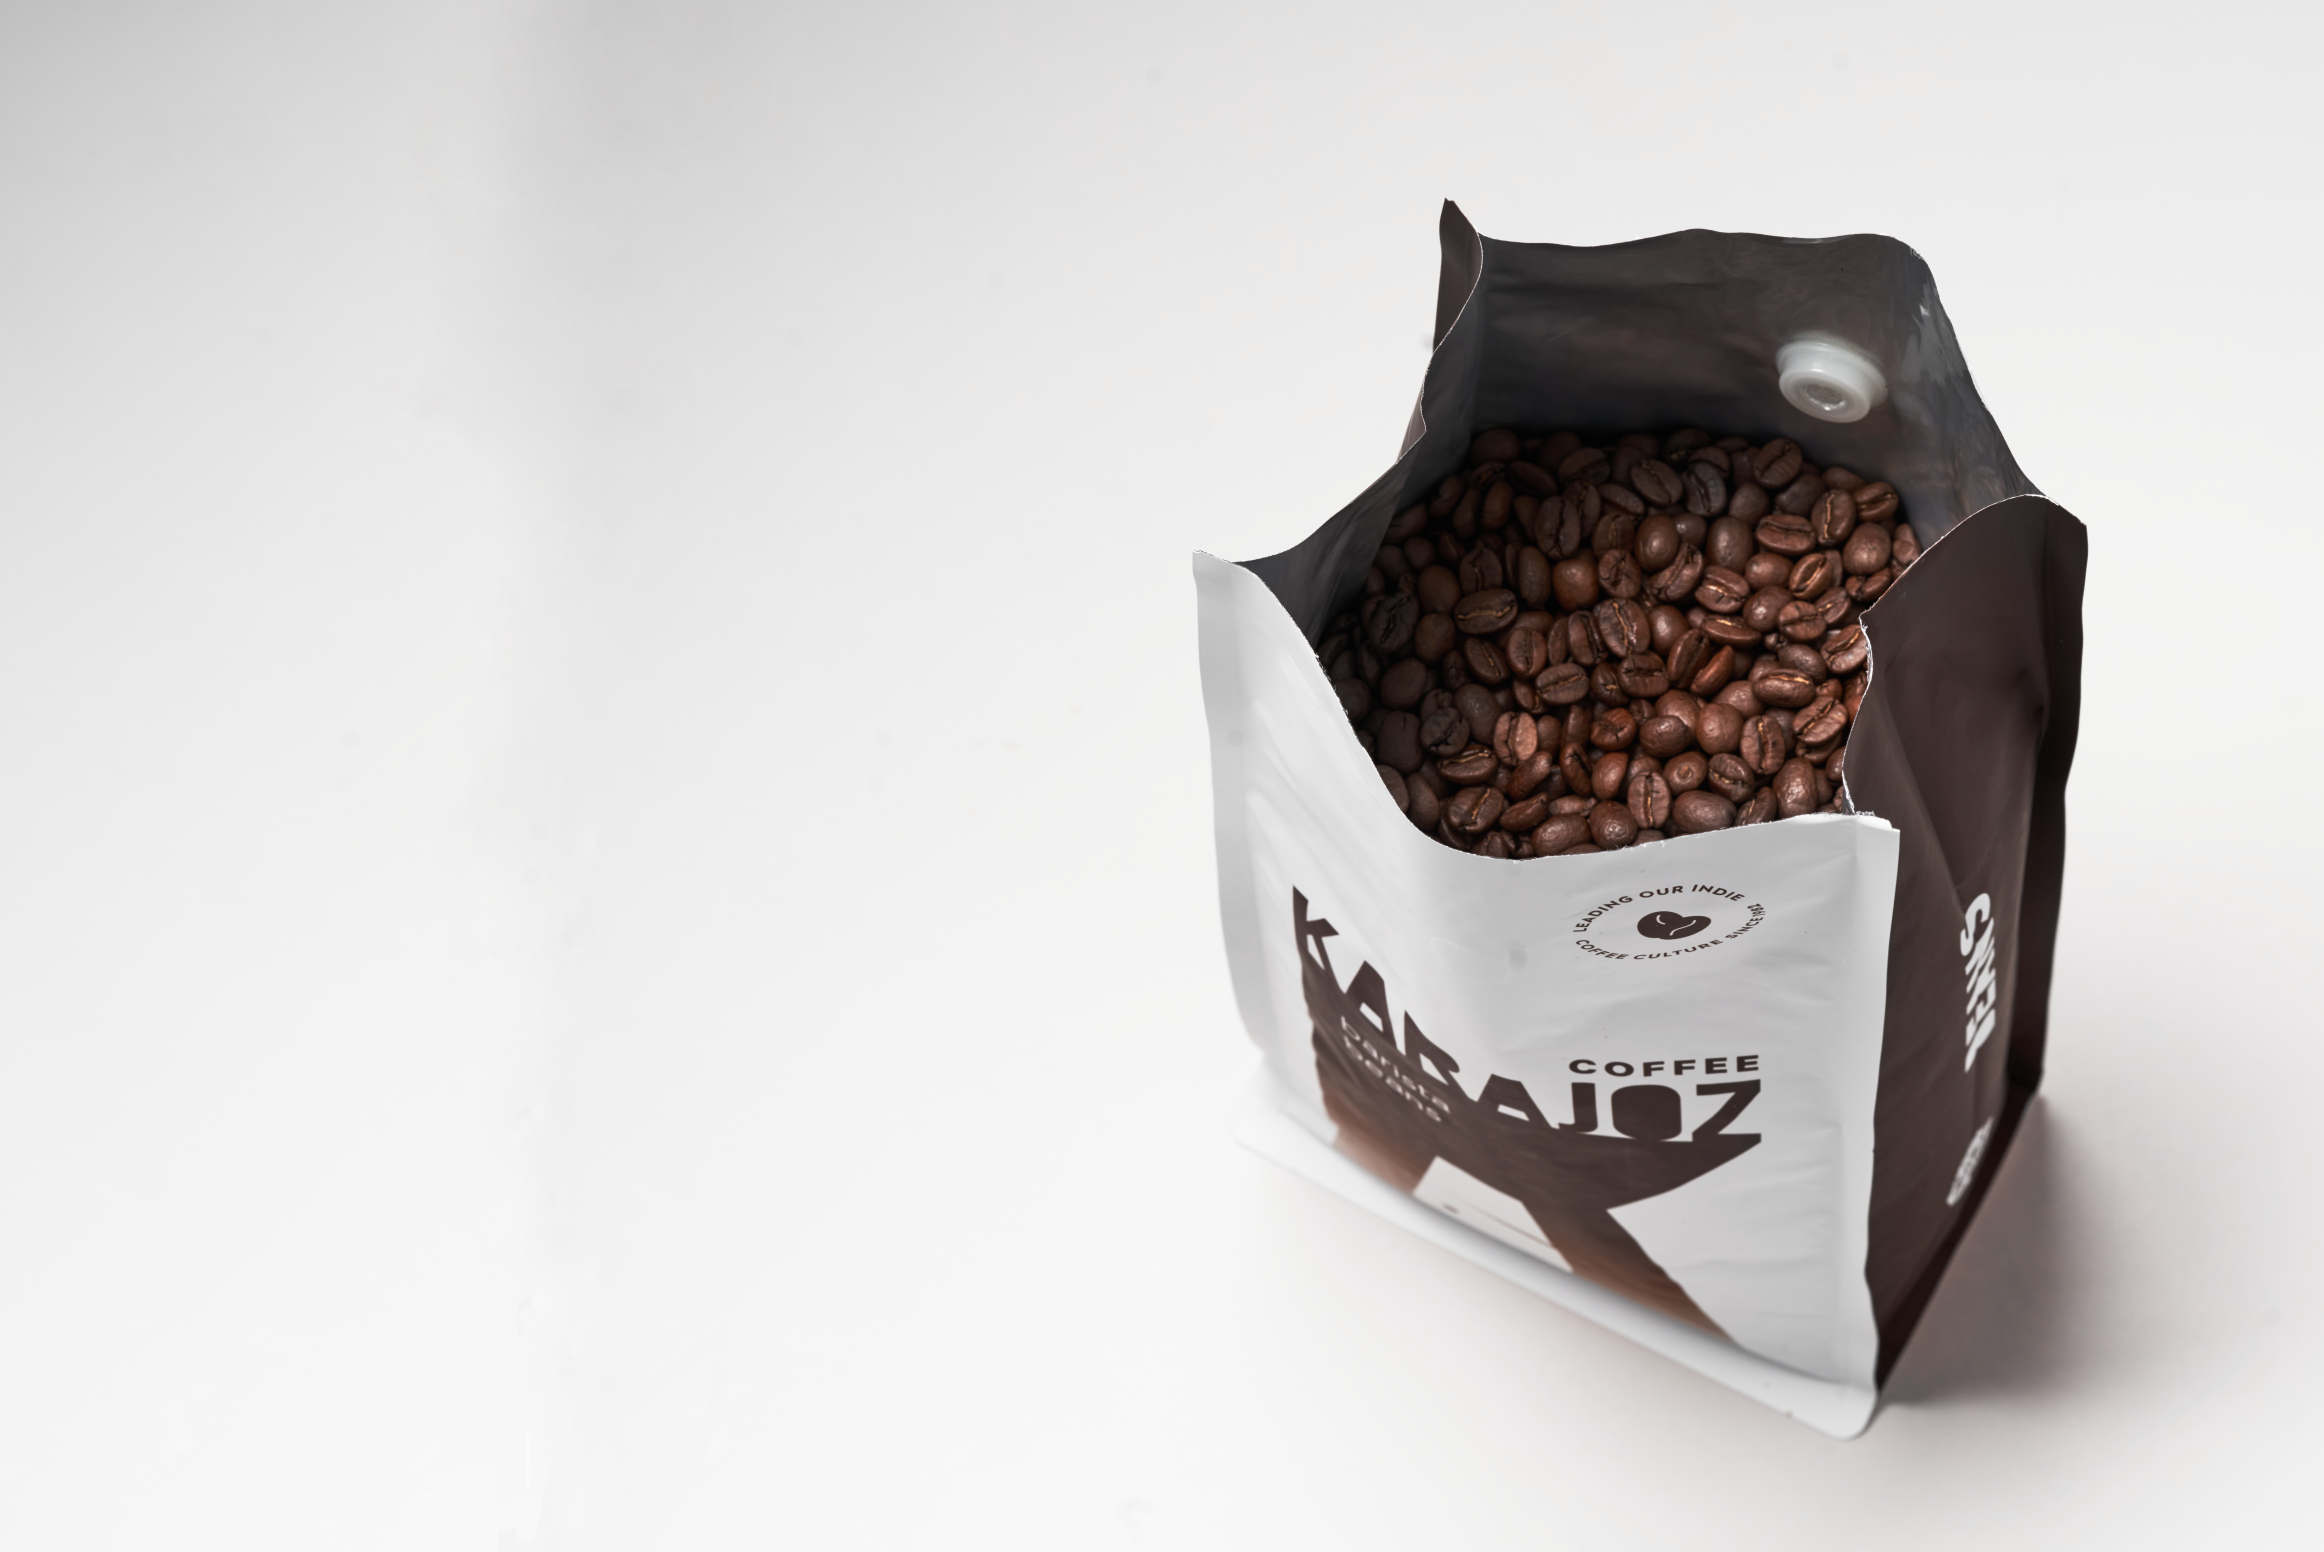 Karajoz Coffee New Zealand Small Batch Freshly Roasted Coffee Beans Plunger Espresso Barista blend